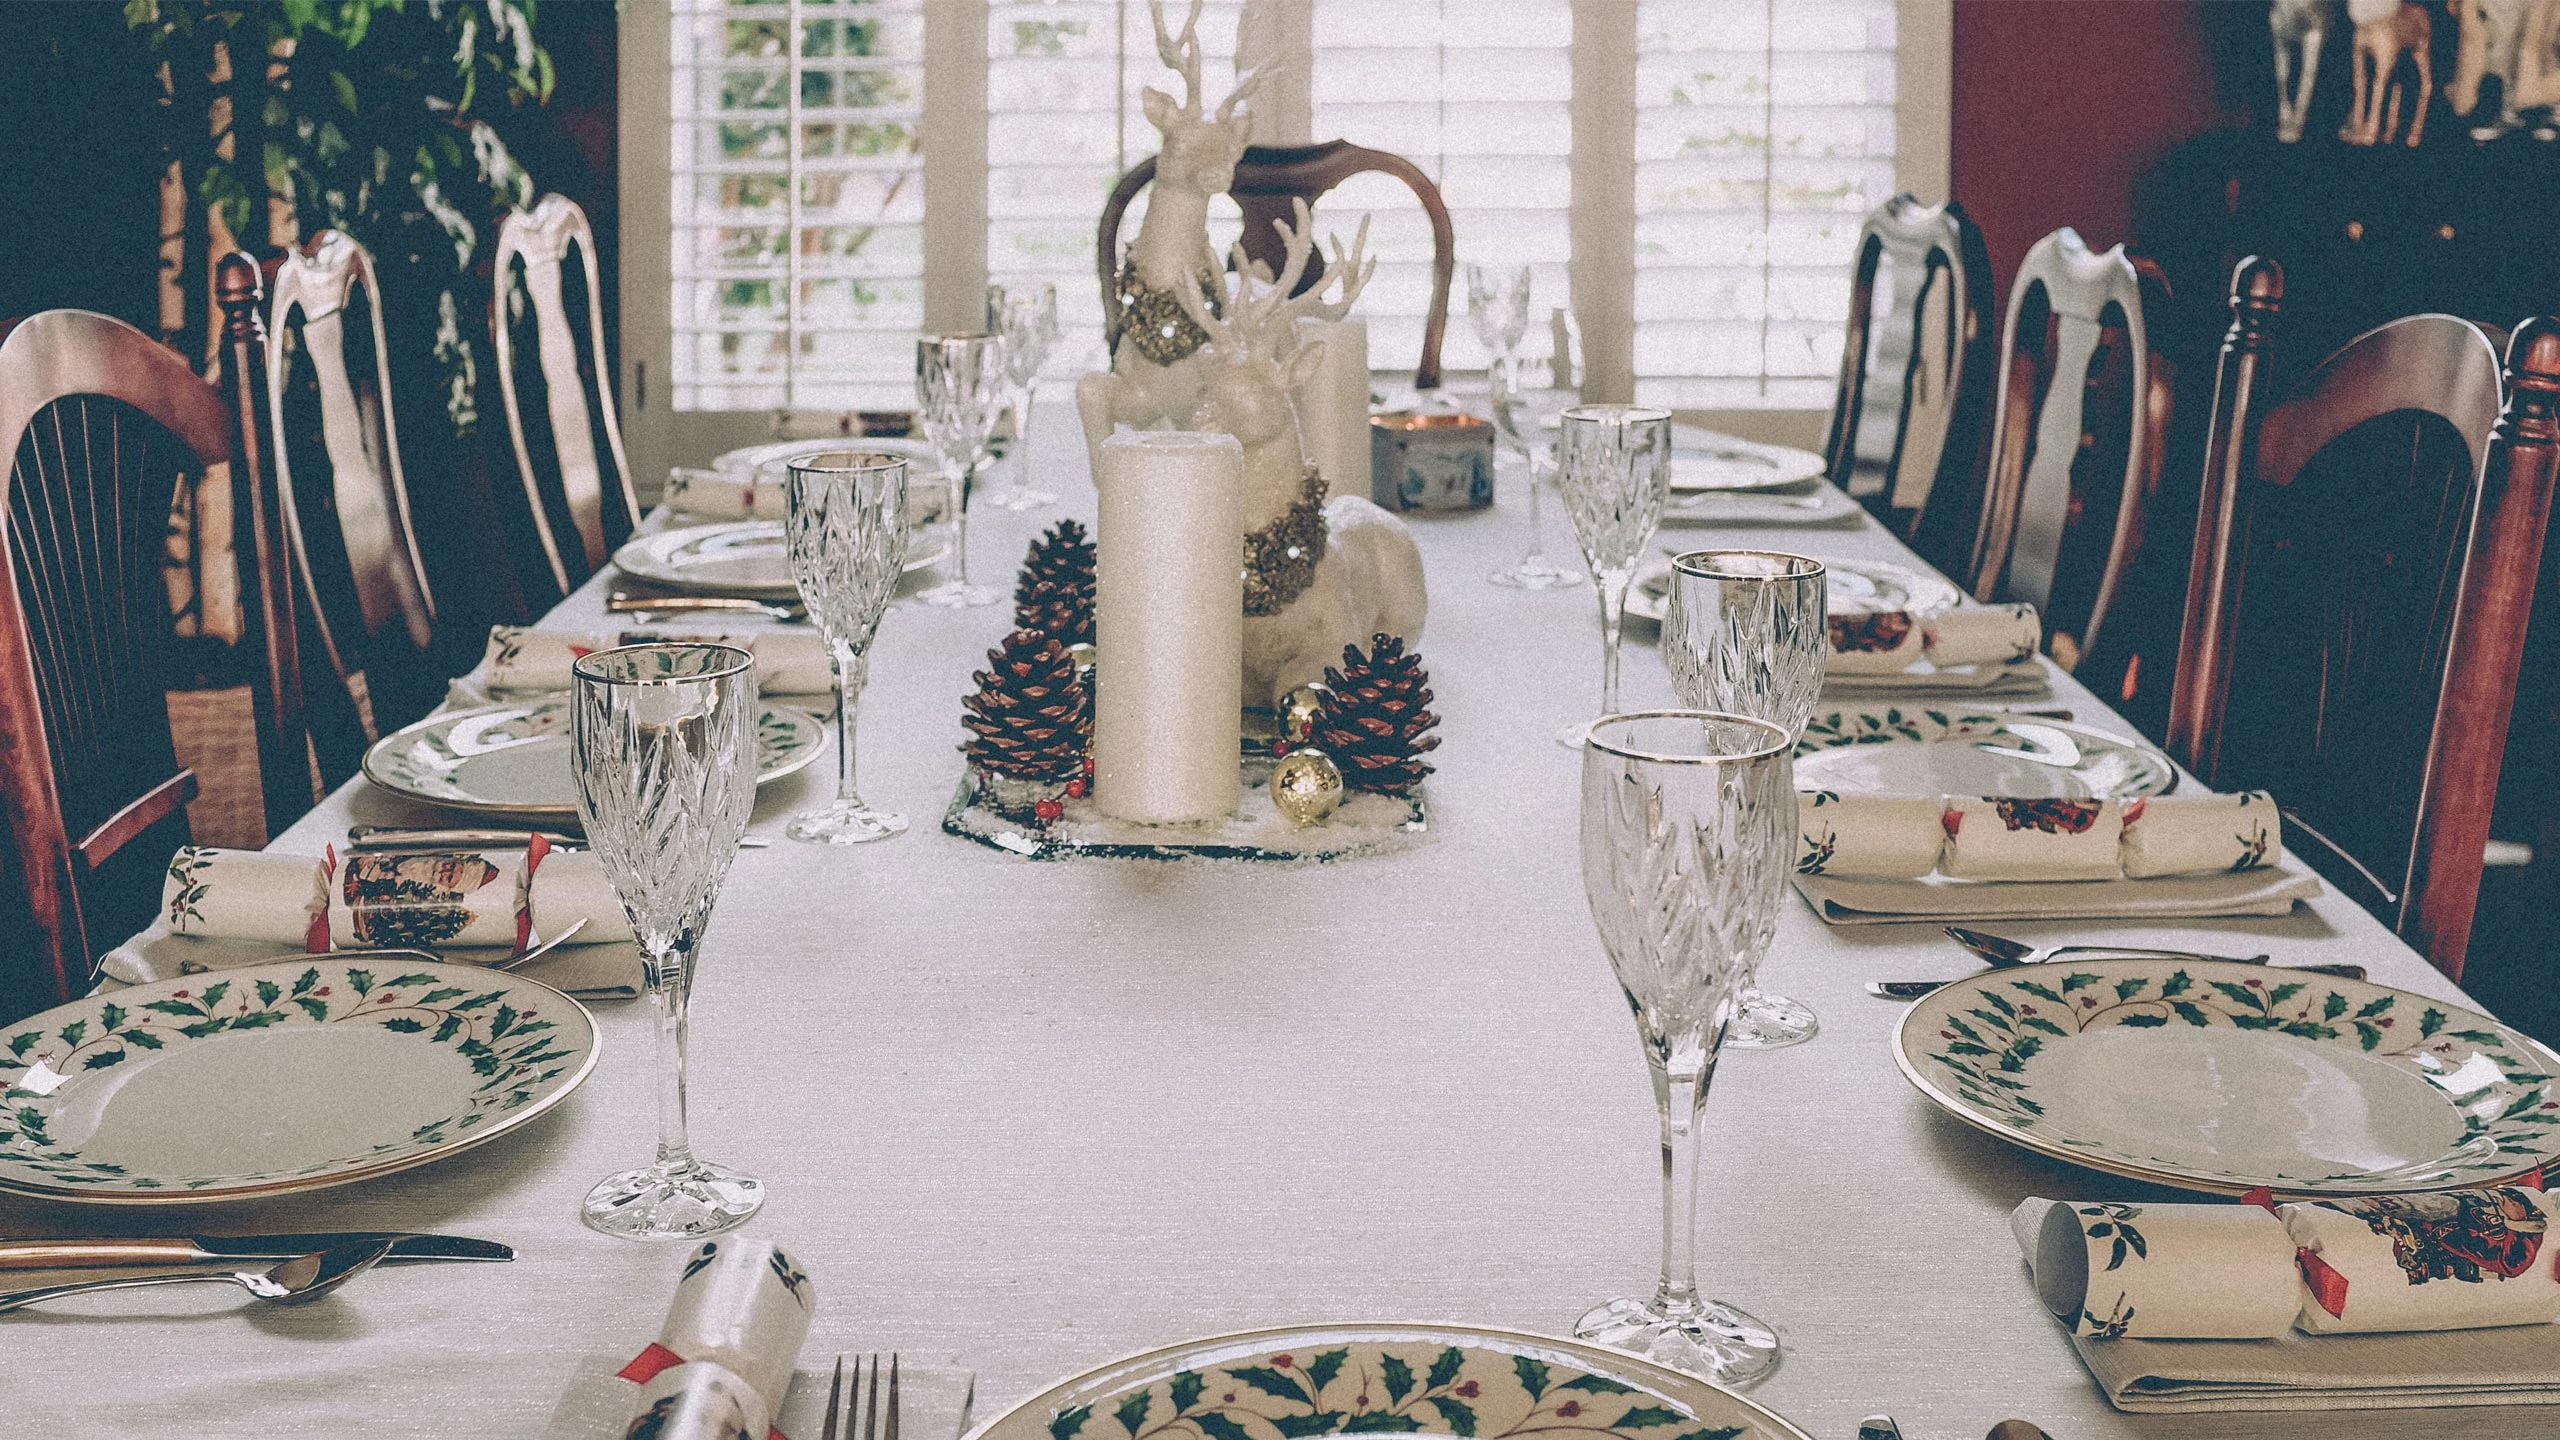 ¿Necesitas ideas para decorar tu mesa navideña?